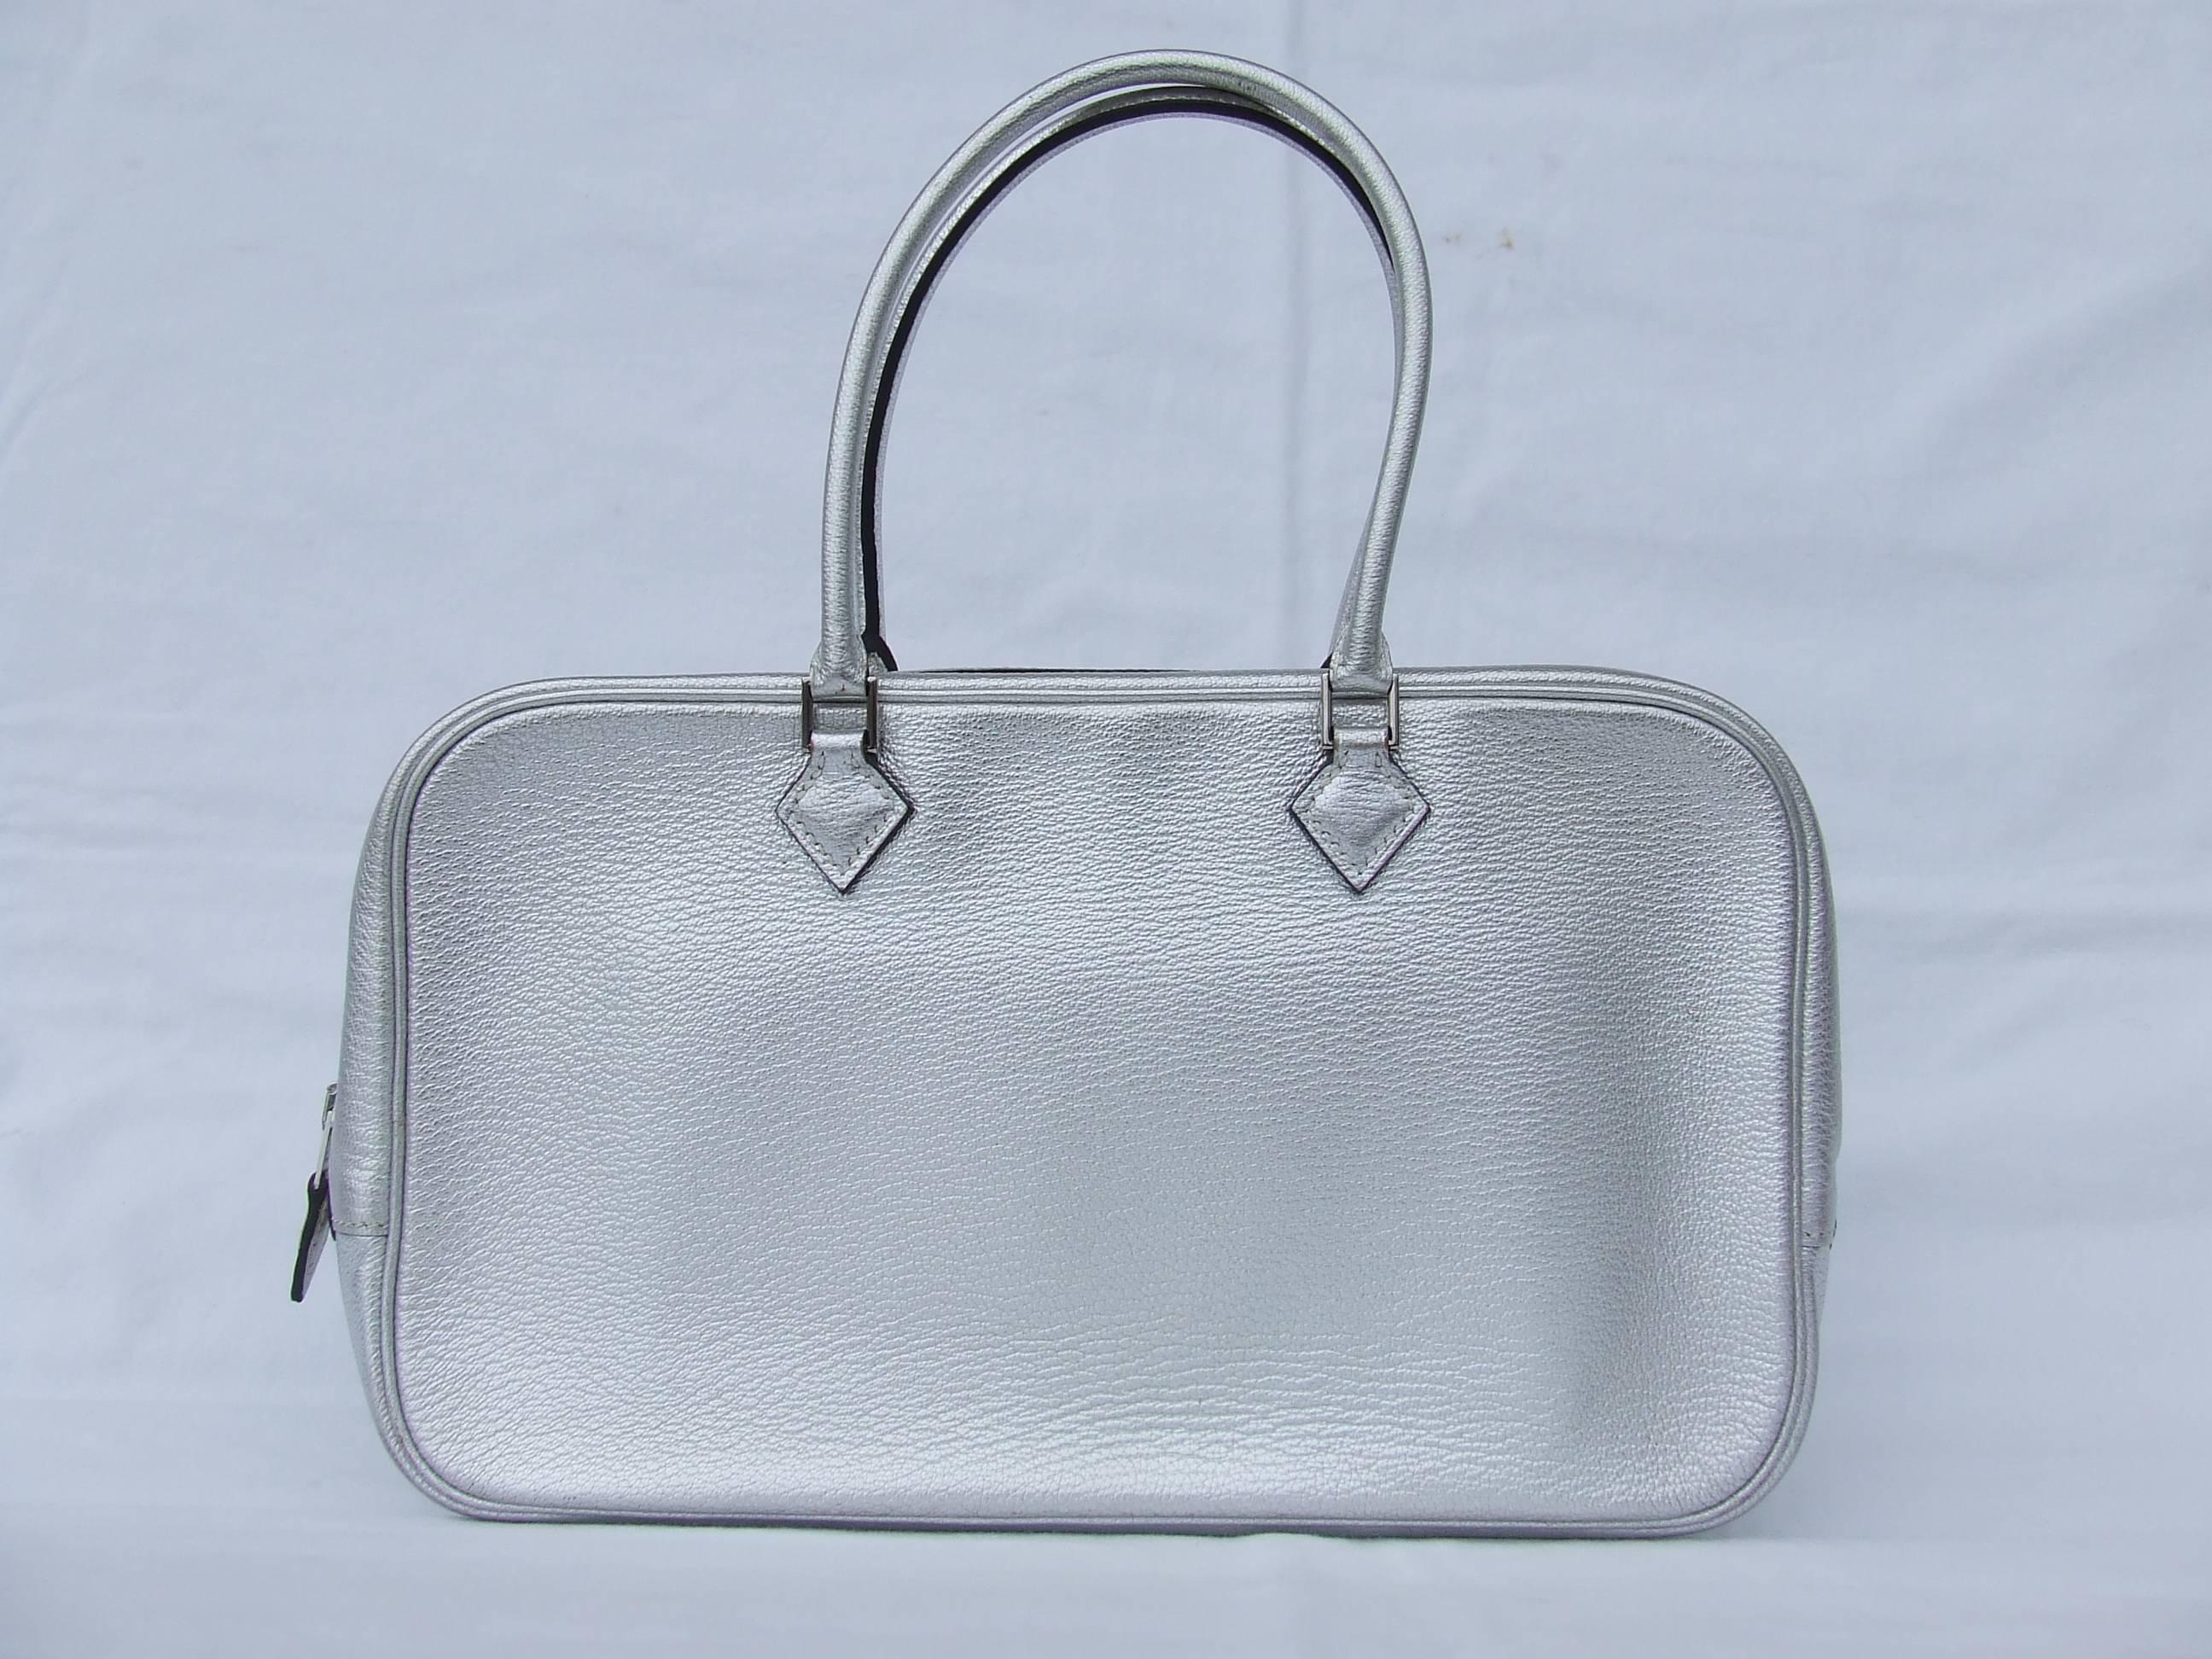 Women's Hermès Limited Edition Metallic Silver Chevre Leather Plume Elan Bag PHW 28 cm